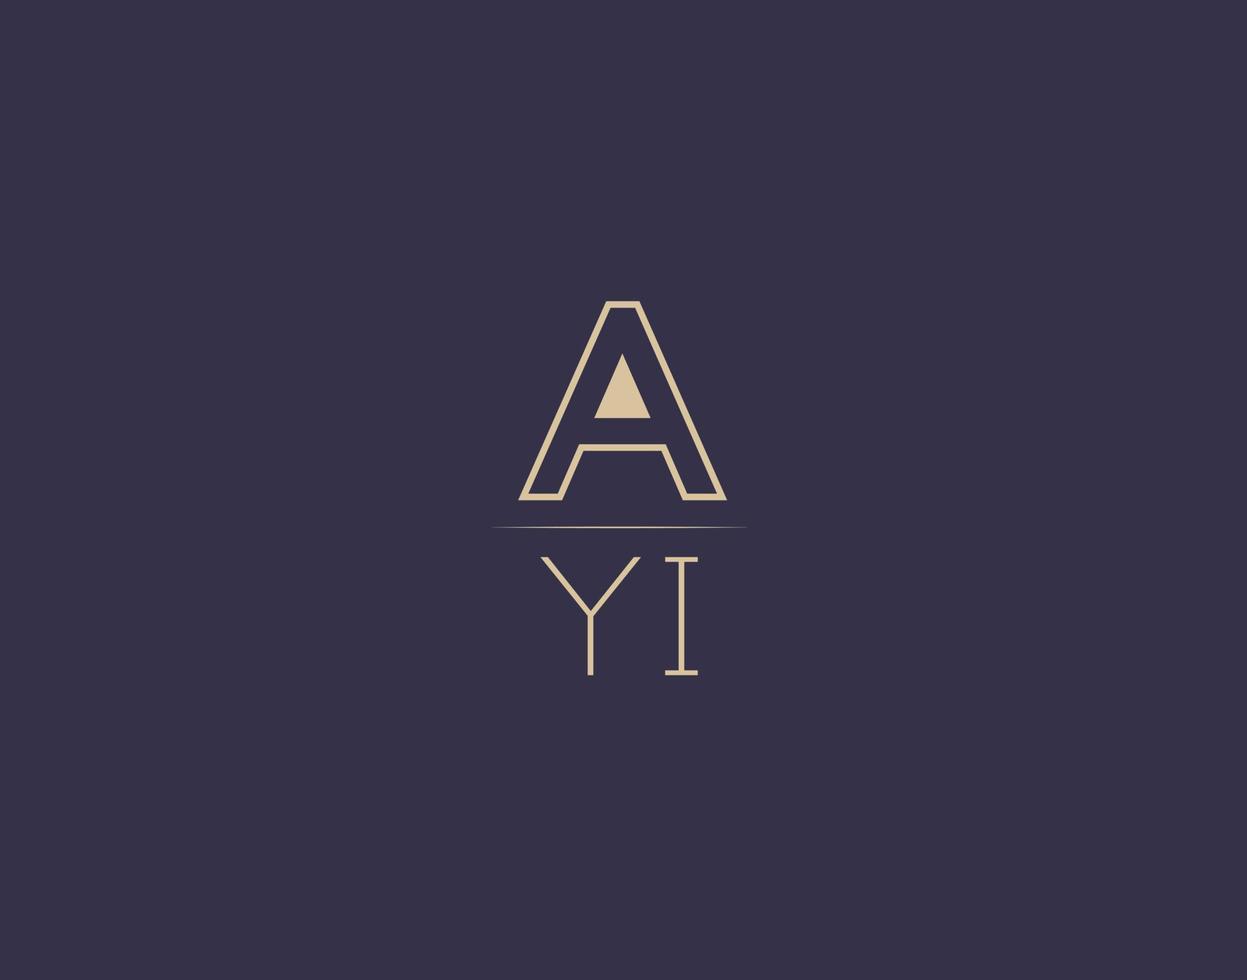 AYI letter logo design modern minimalist vector images